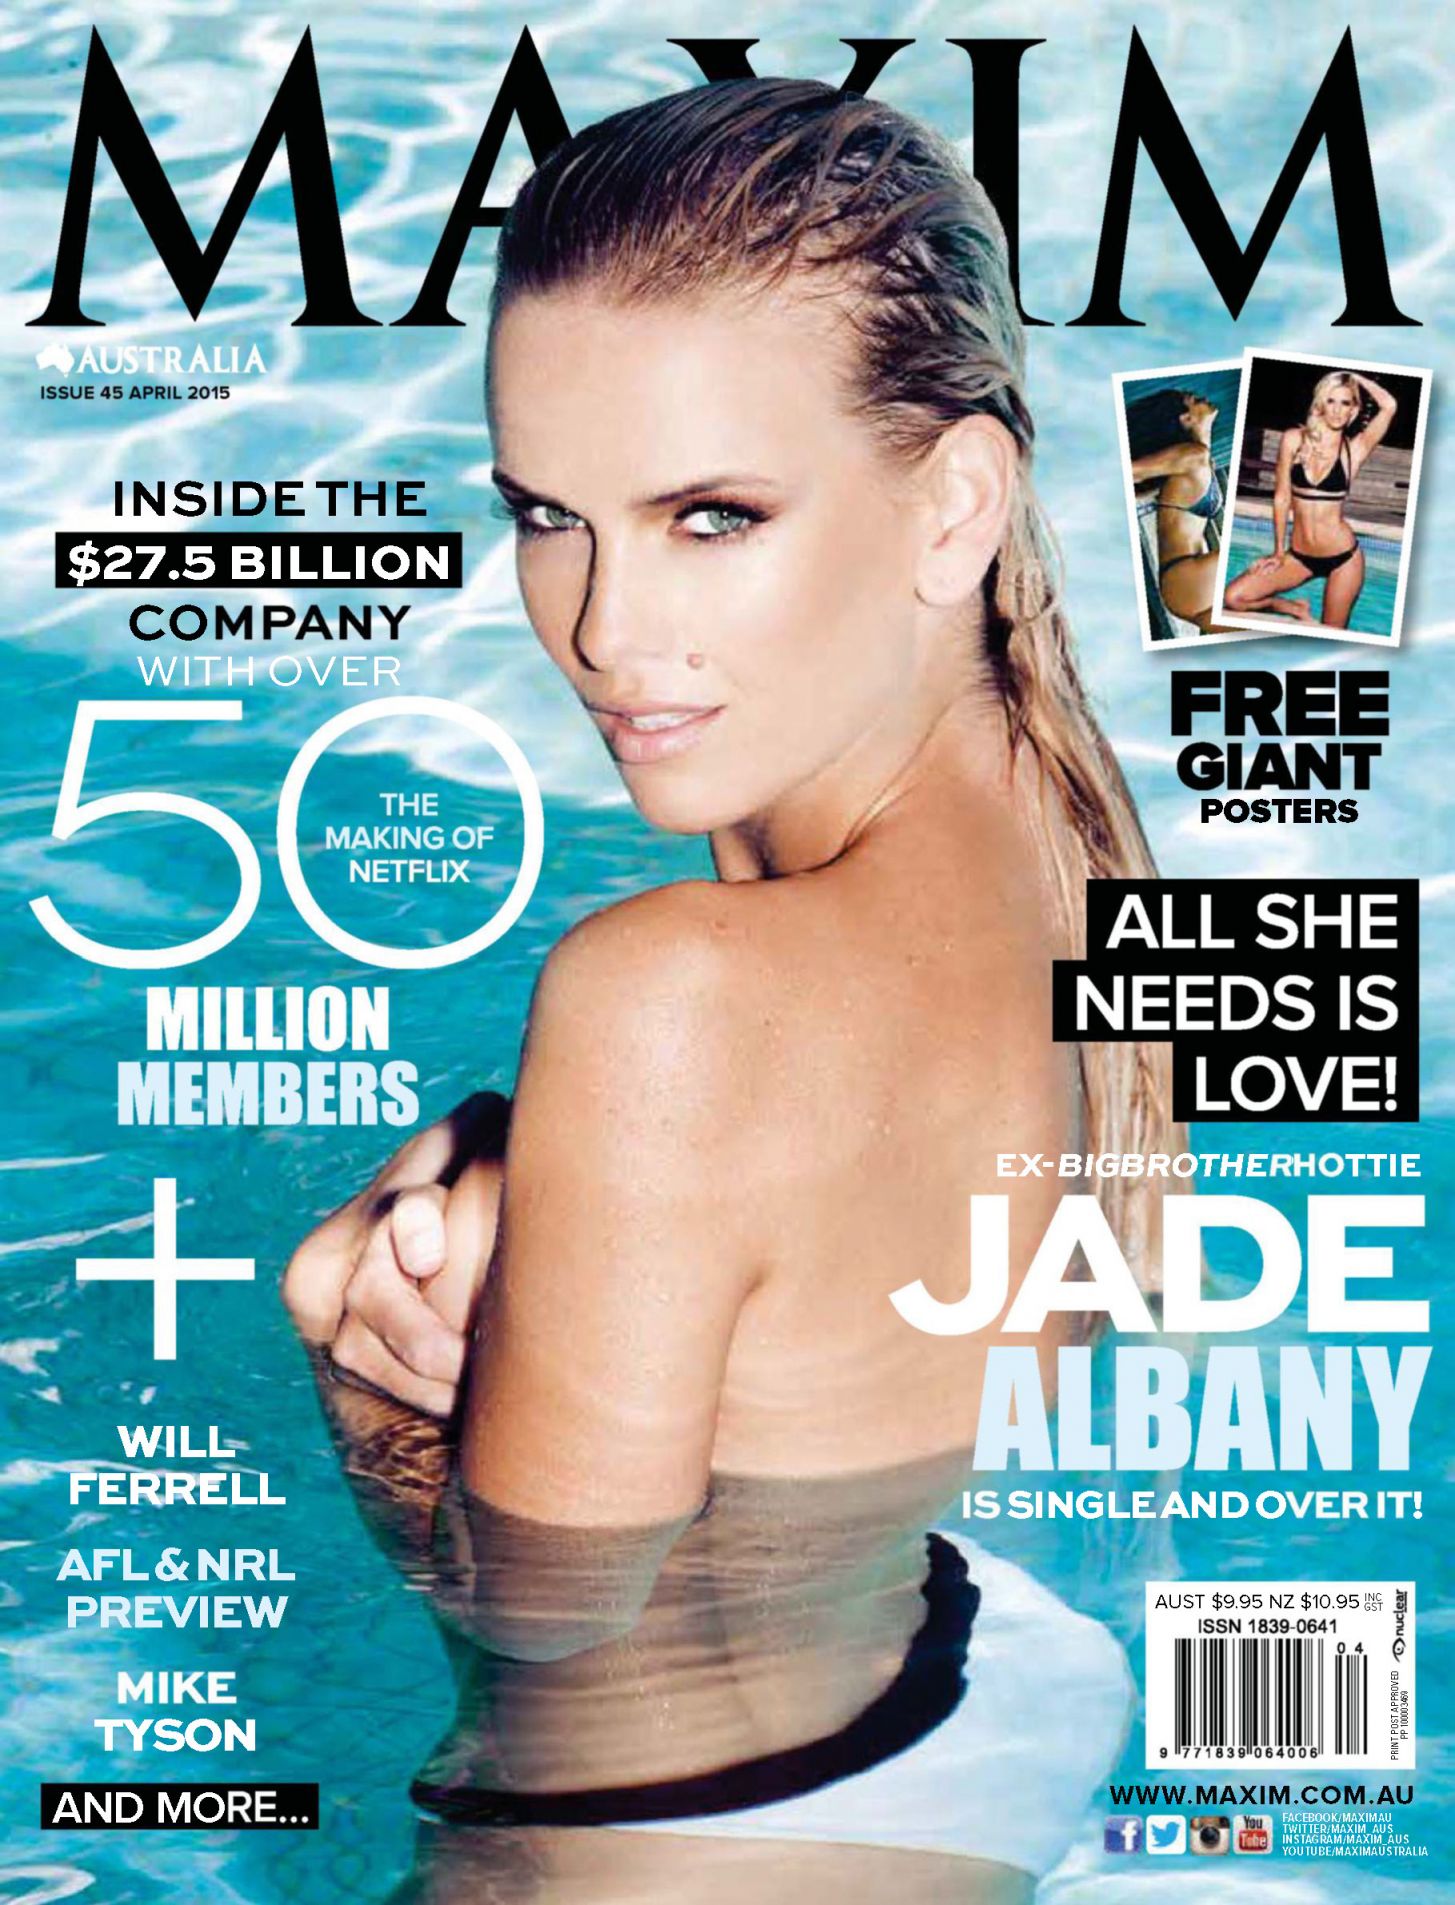 Jade Albany for Maxim Magazine Australia